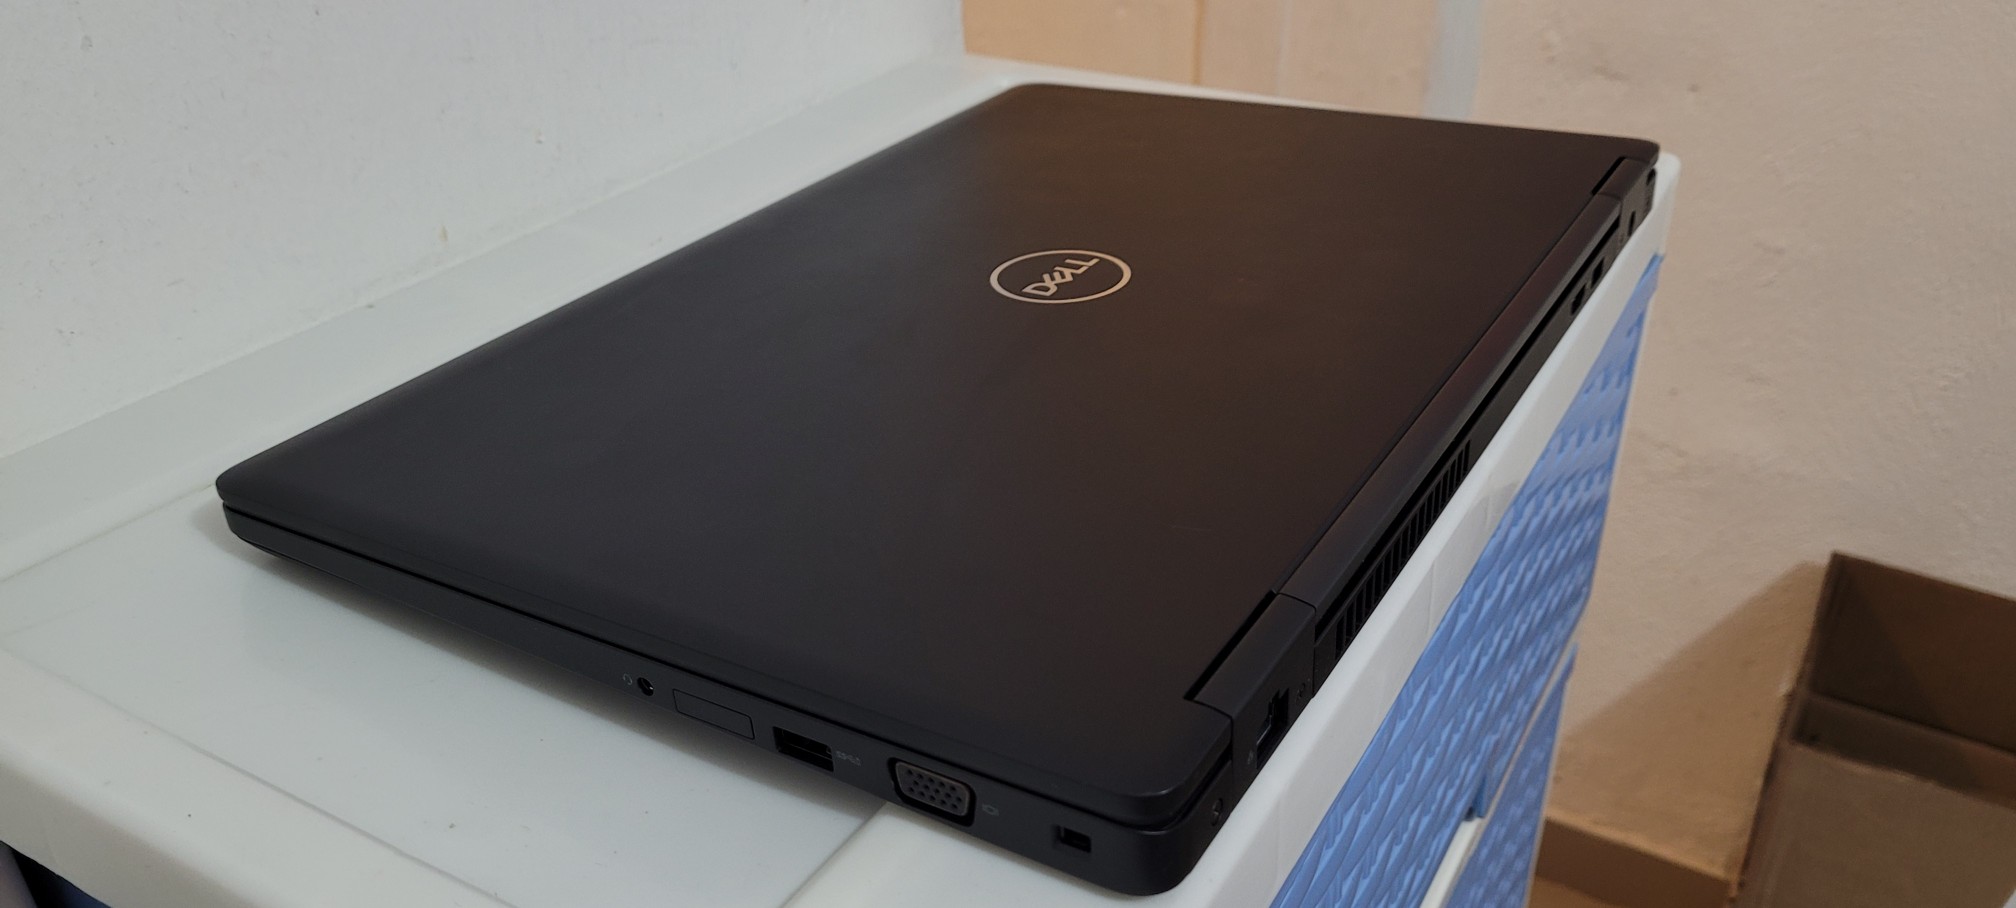 computadoras y laptops - Laptop Dell 5570 17 Pulg Core i7 6ta Gen Ram 16gb ddr4 SSD Disco 512gb Aty Radeo 2